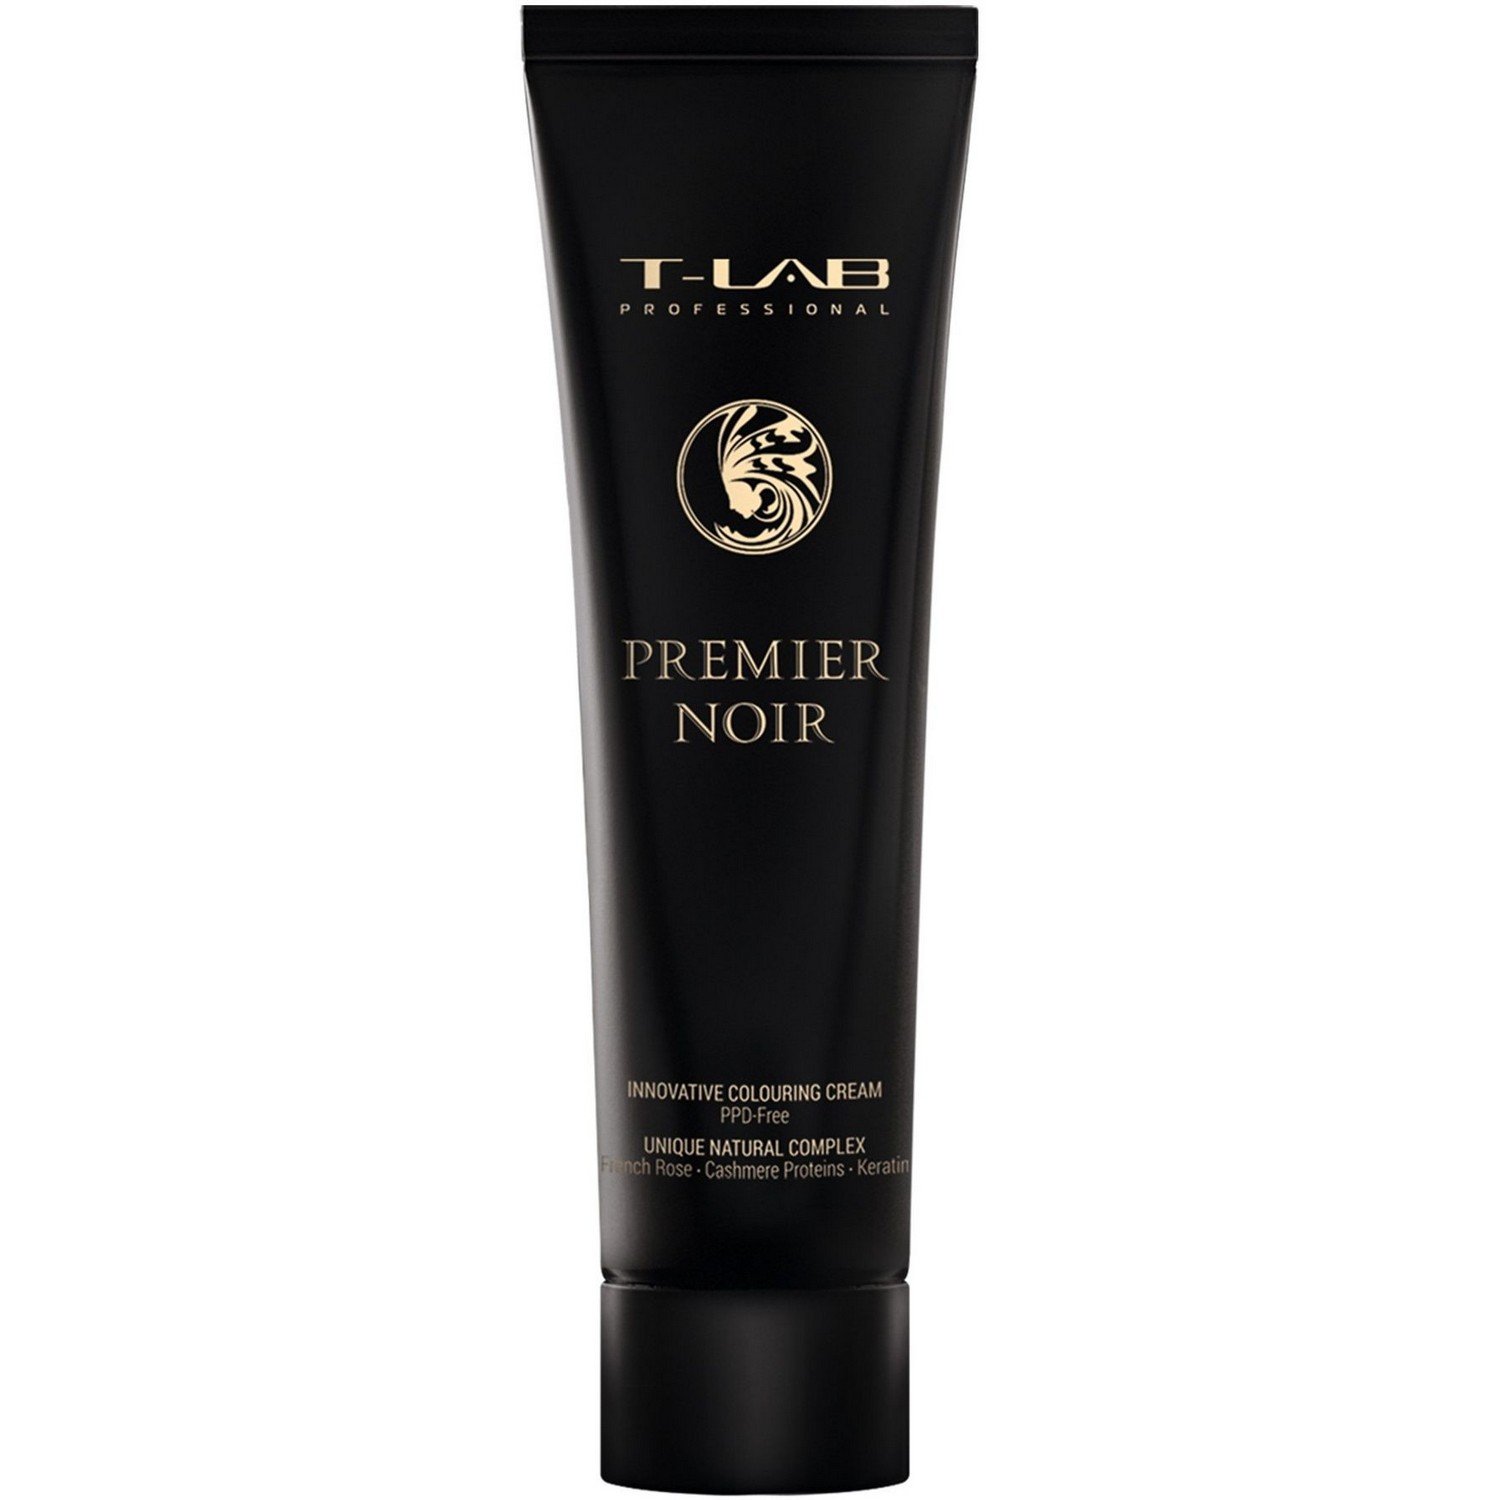 Крем-краска T-LAB Professional Premier Noir colouring cream, оттенок 6.32 (dark golden iridescent blonde) - фото 1